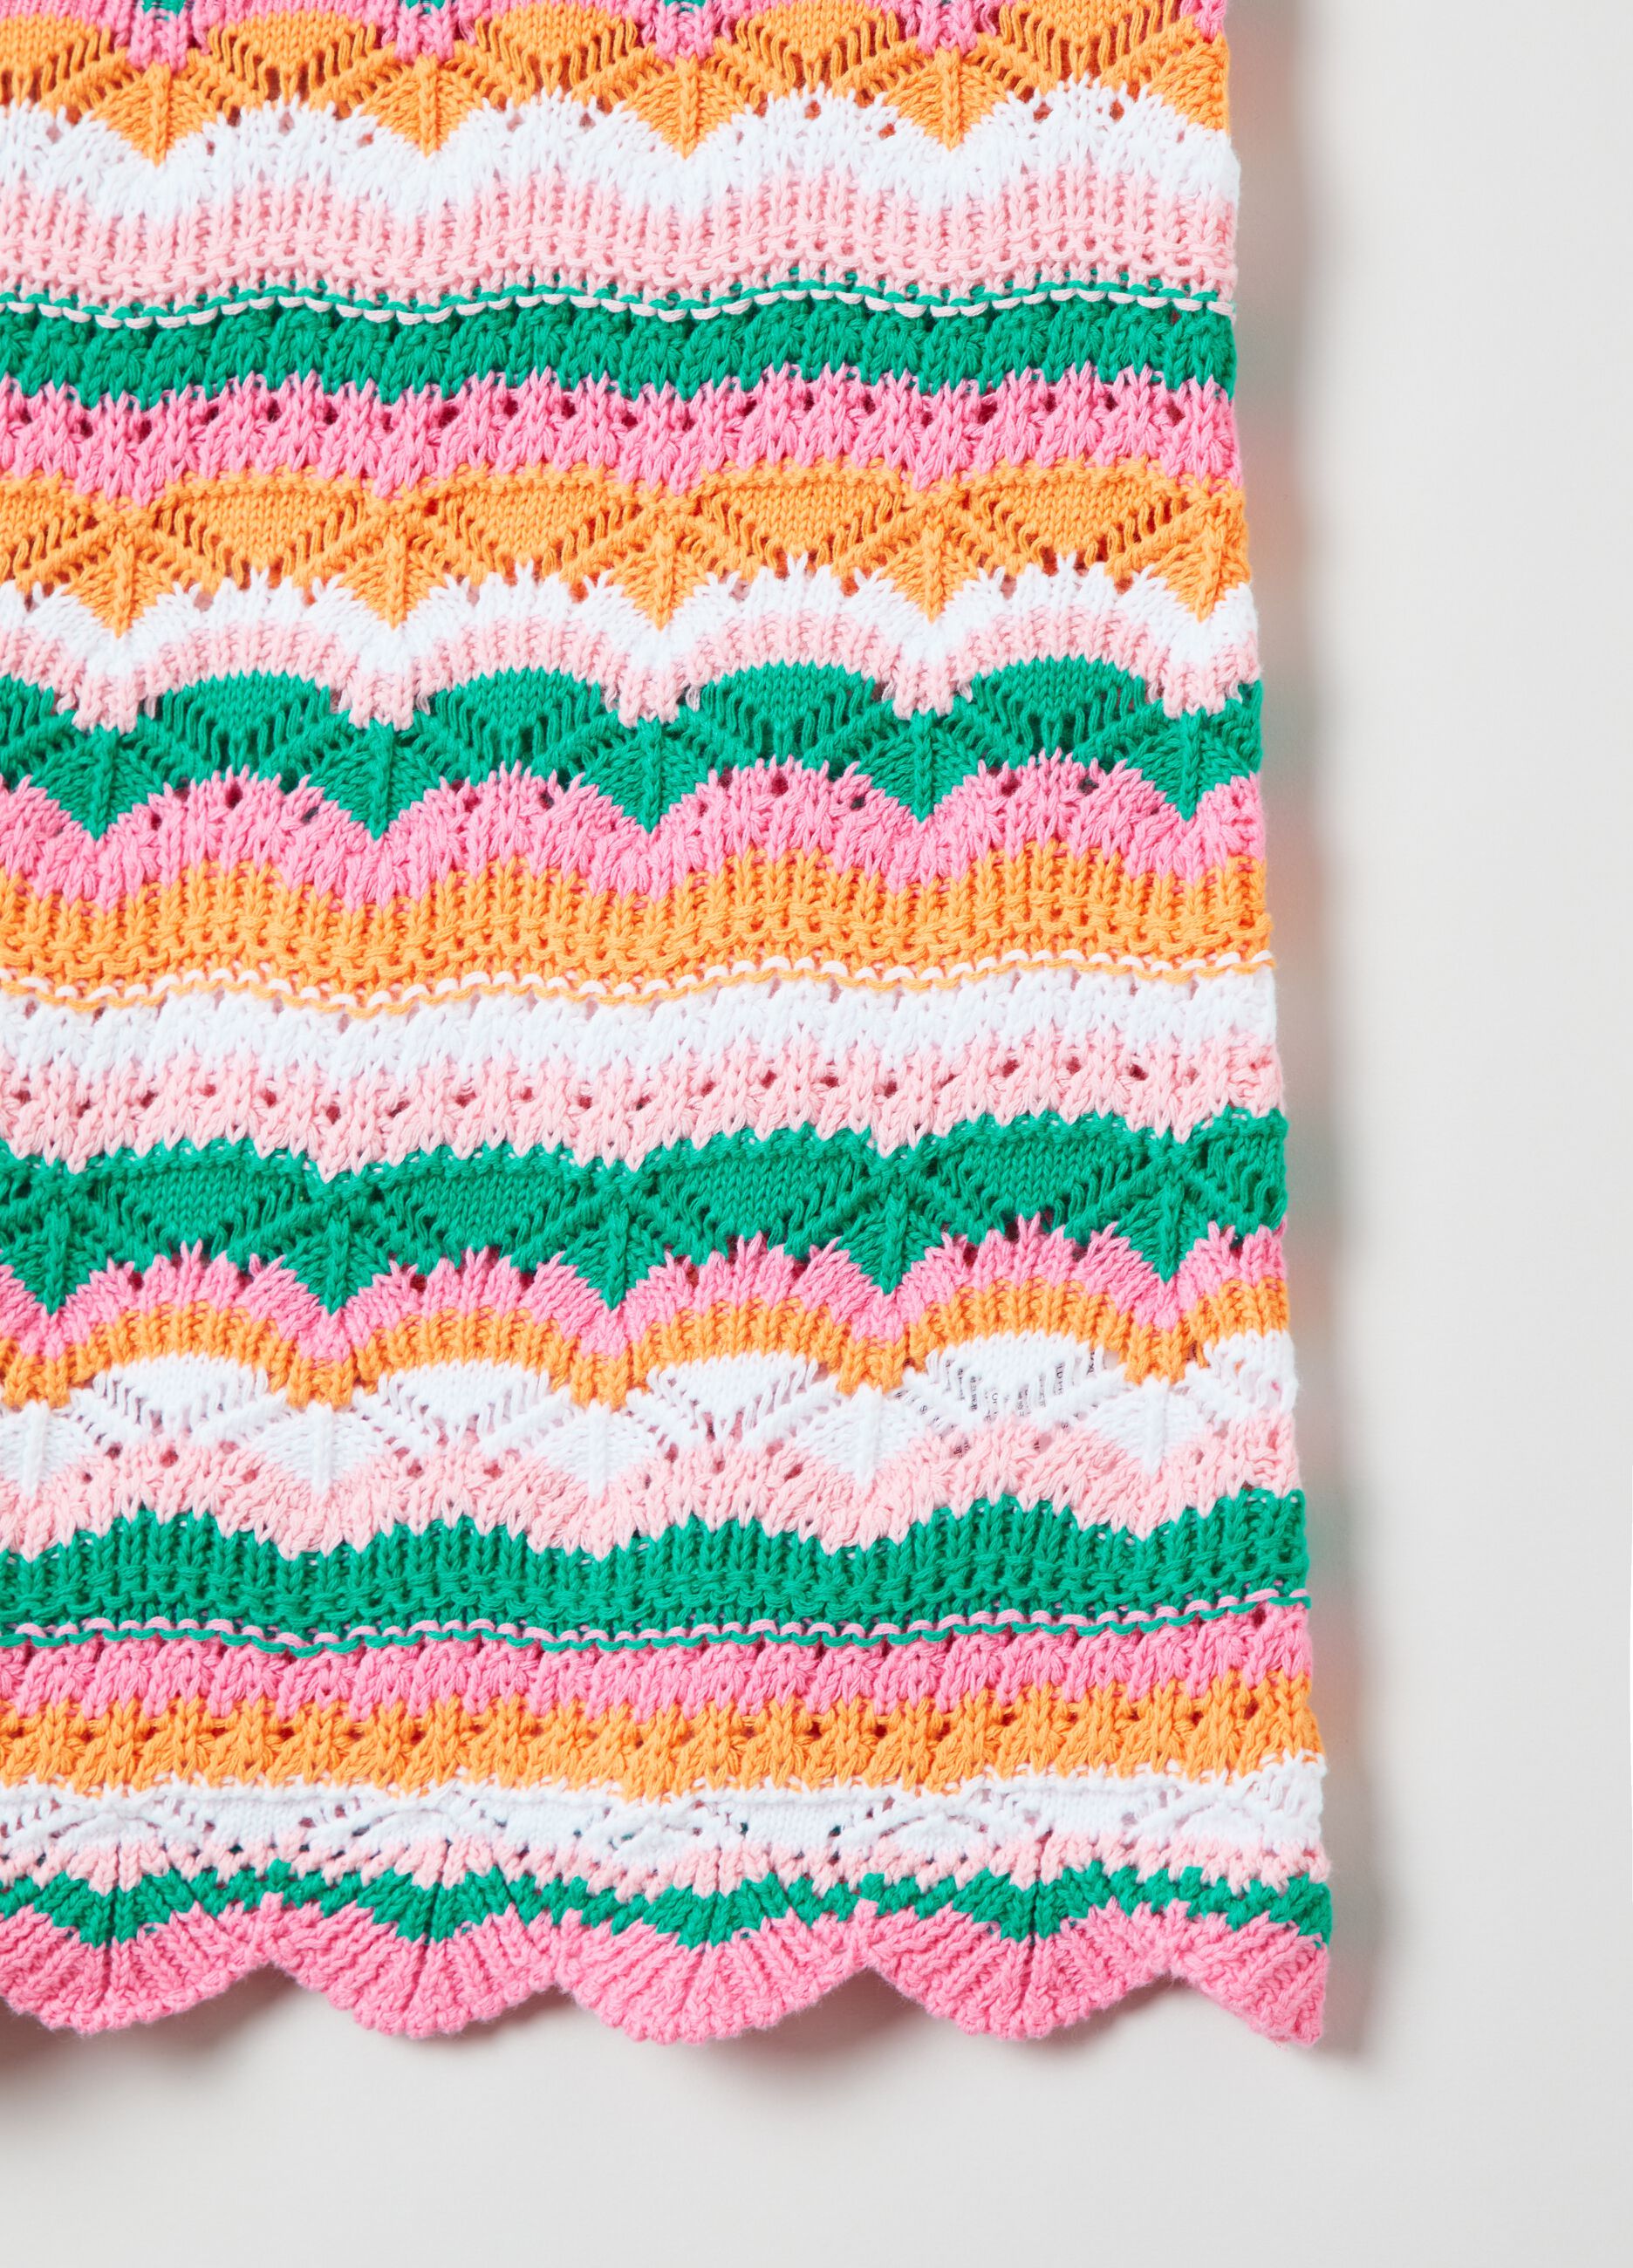 Sleeveless dress in crochet cotton